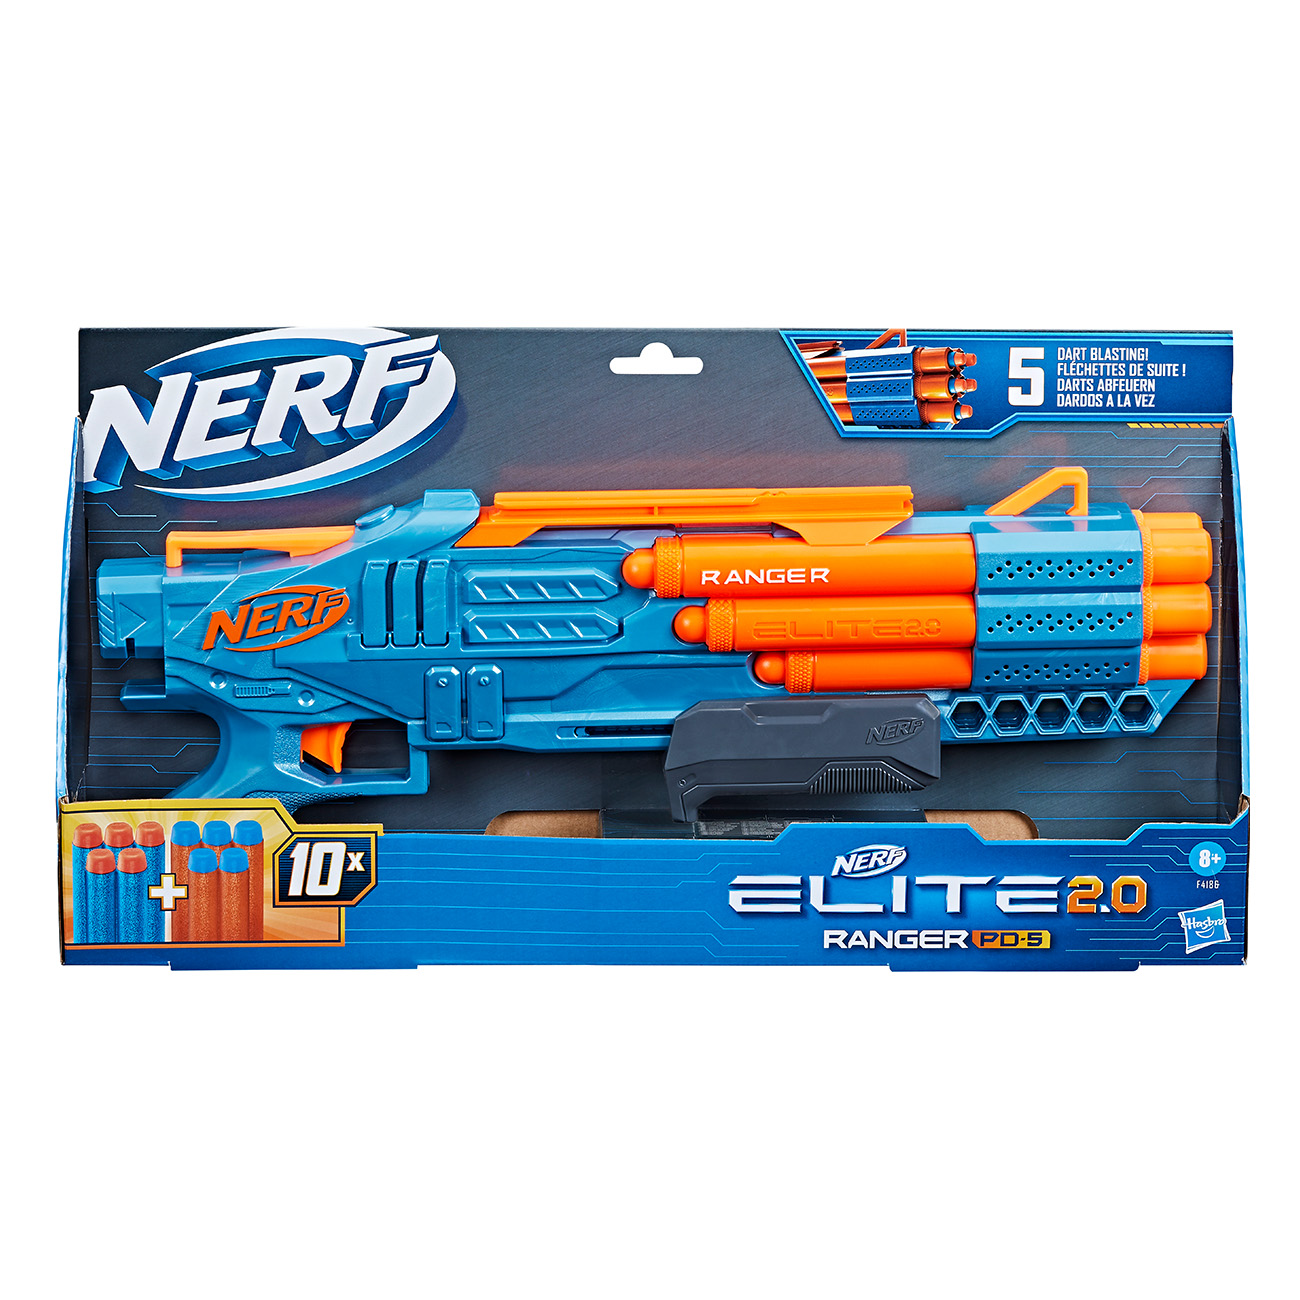 NERF Nerf ELITE 2.0 Ranger Spielzeugwaffe Keine 5 Angabe PD